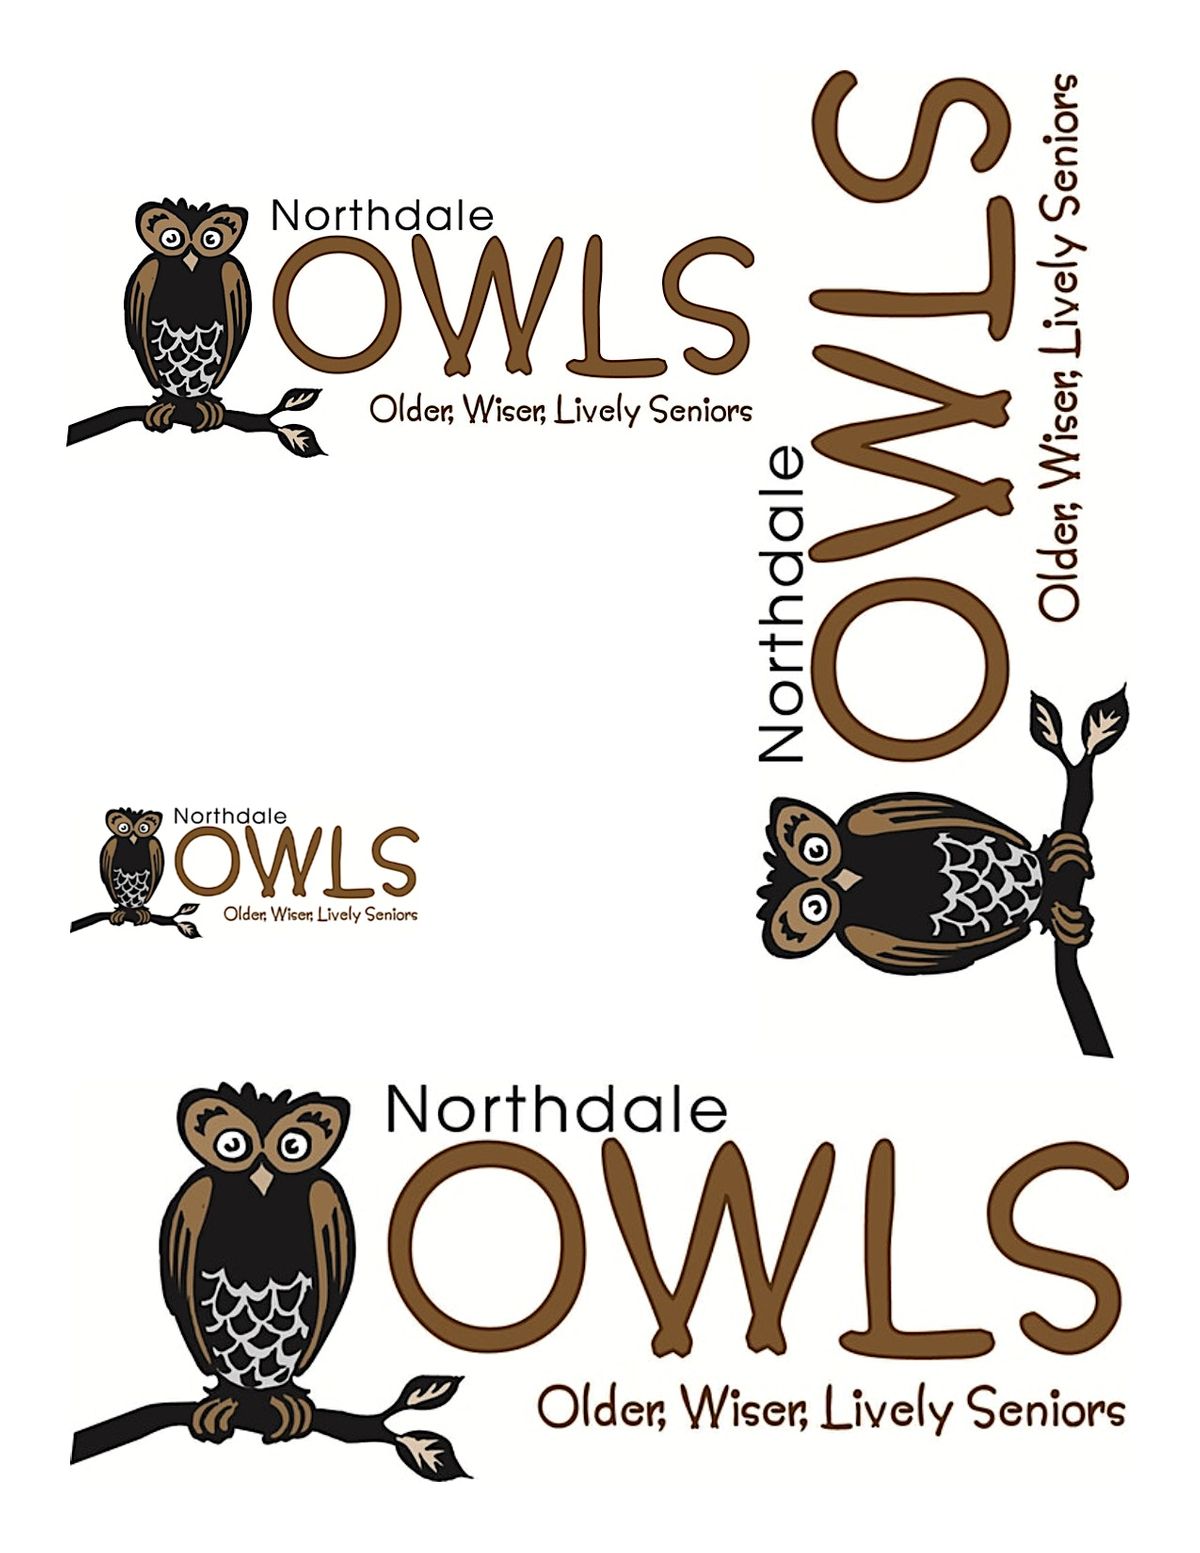 Northdale OWLS 12 consecutive meetings 2023, Northdale Recreation